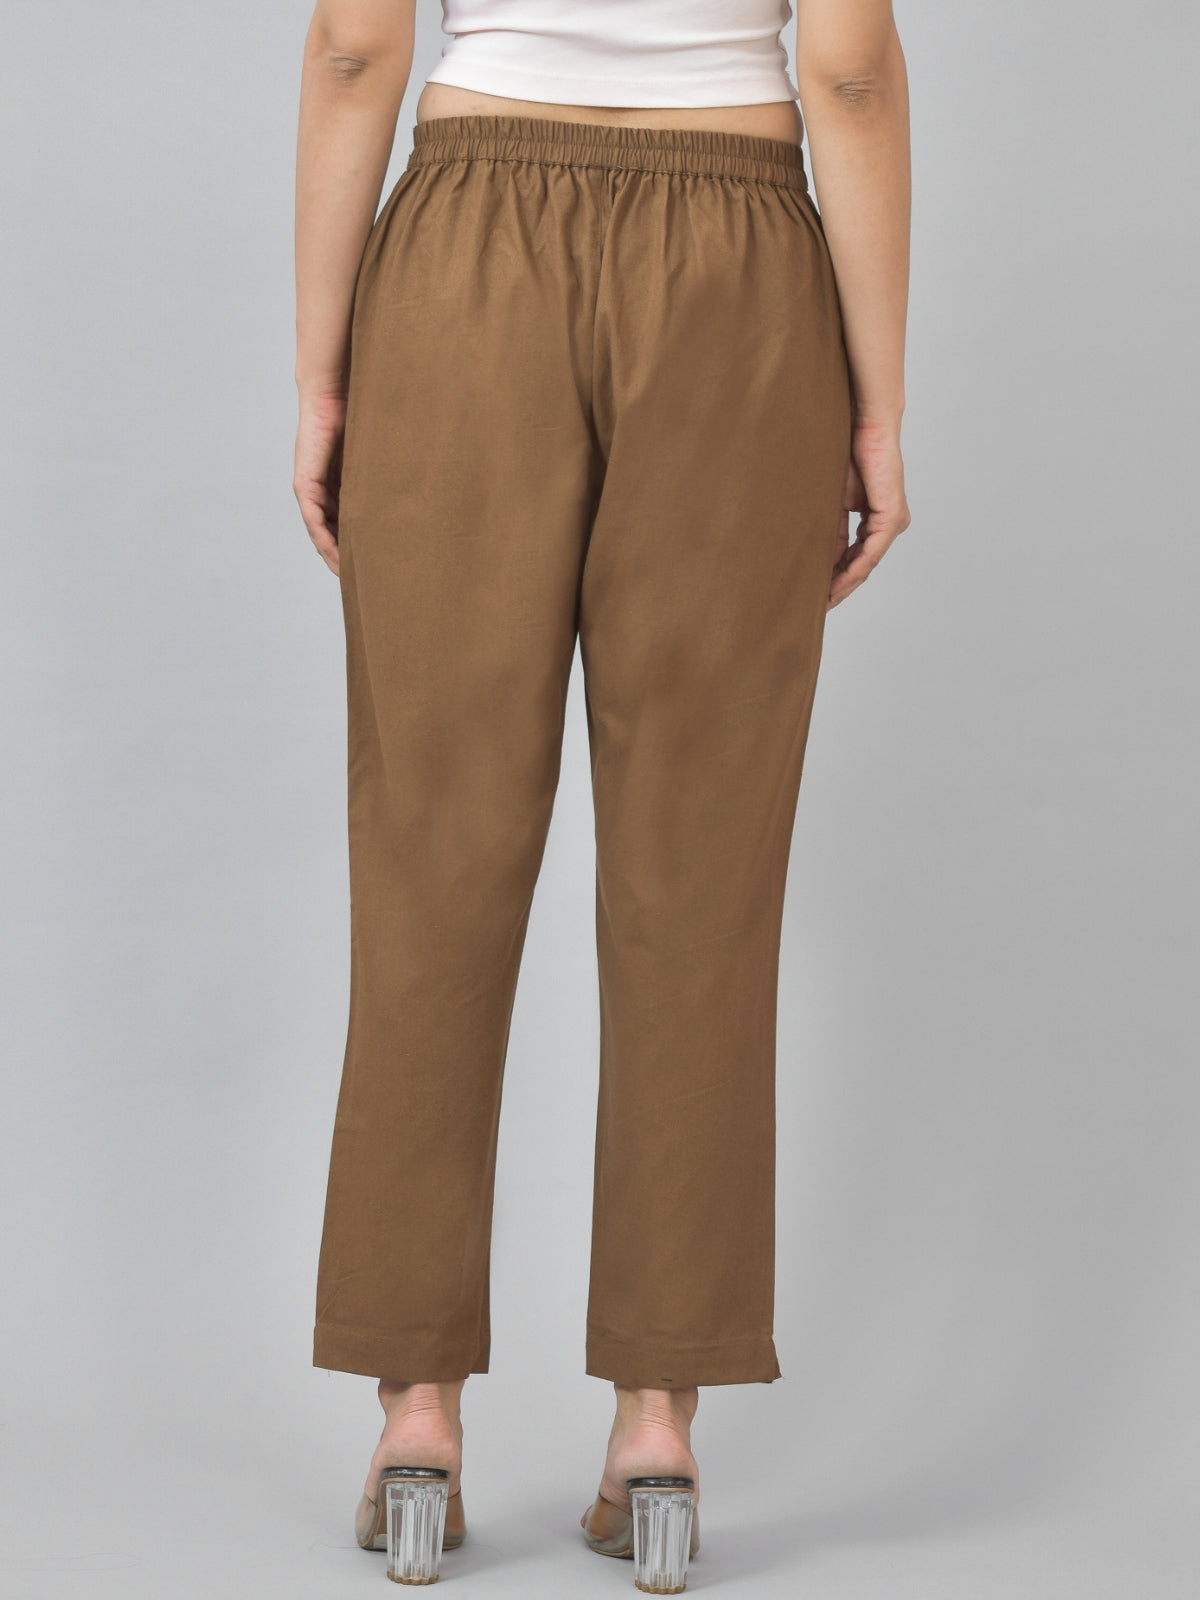 Pack Of 2 Womens Half Elastic Black And Brown Deep Pocket Cotton Pants